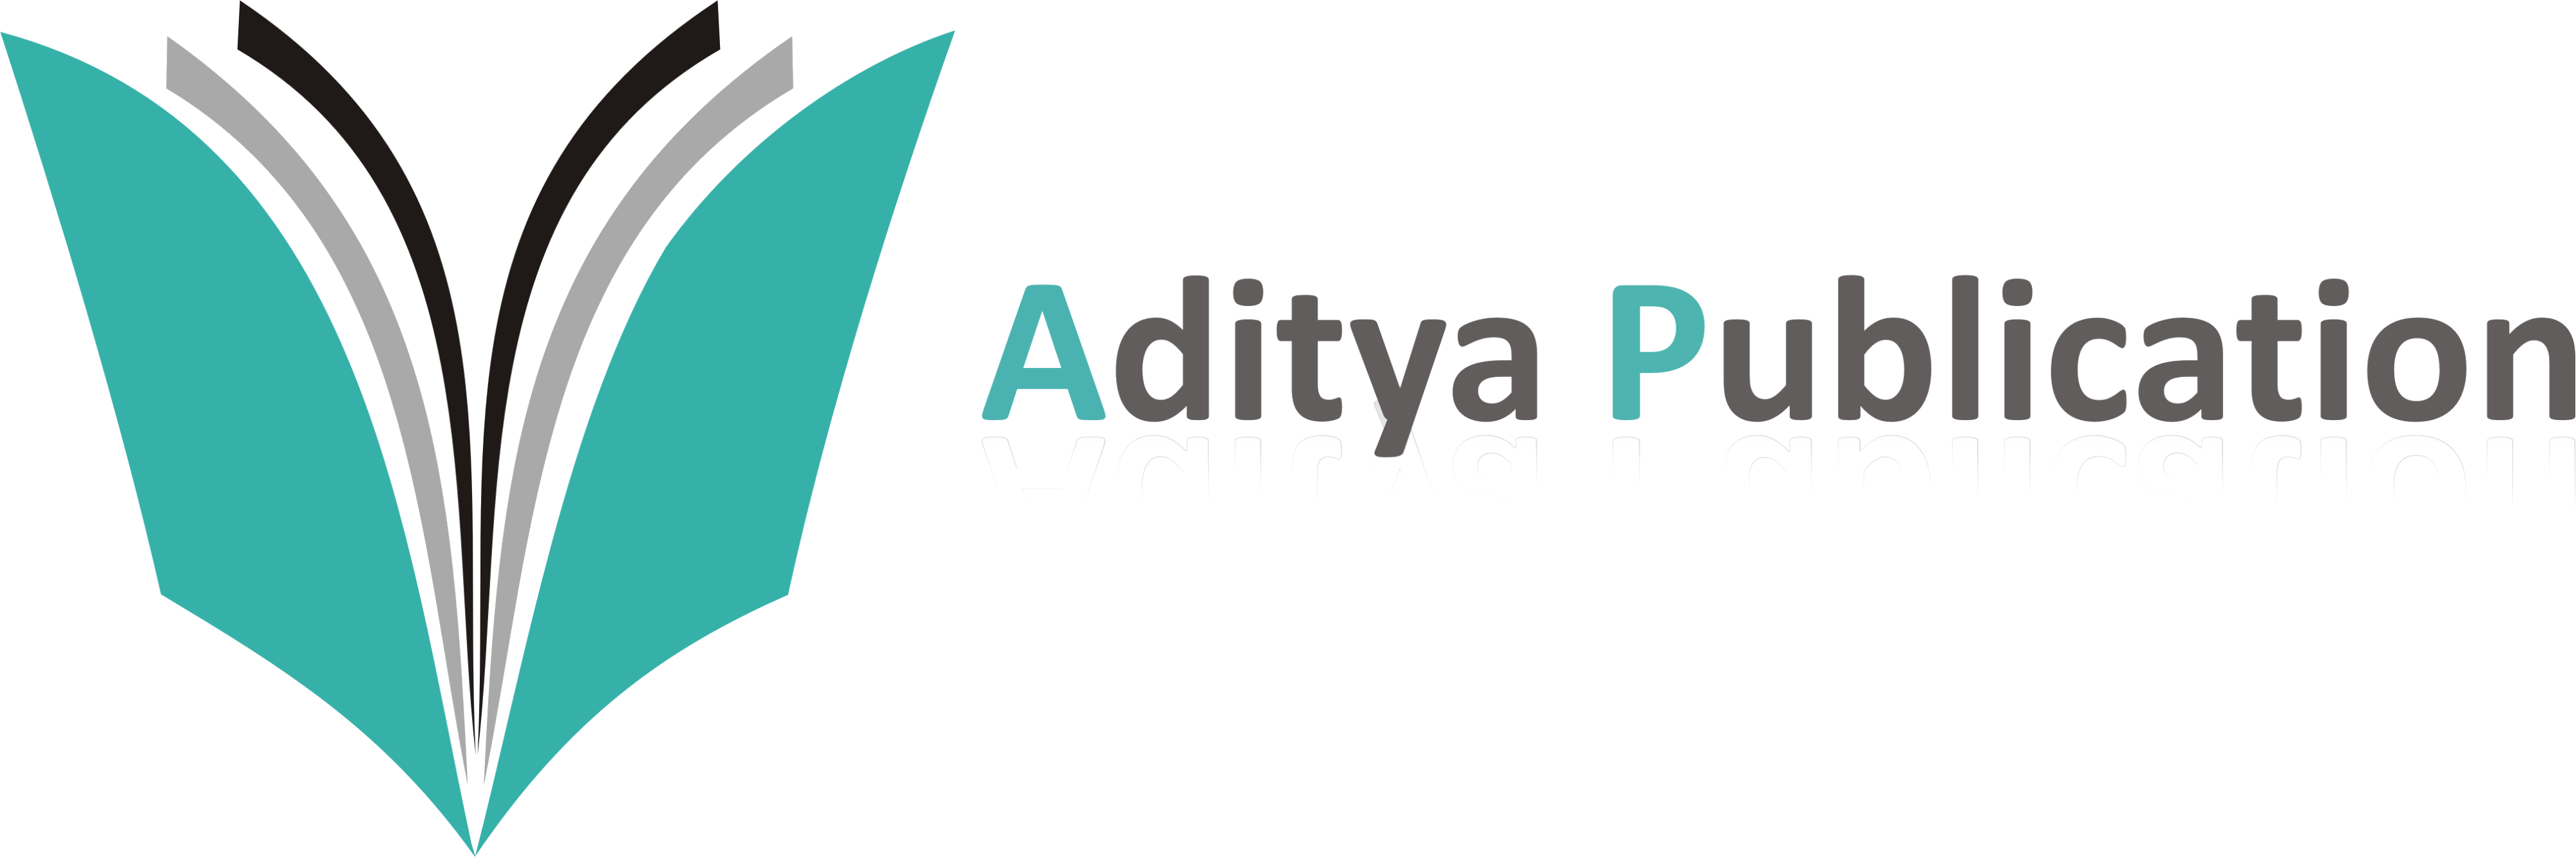 aditya-publication